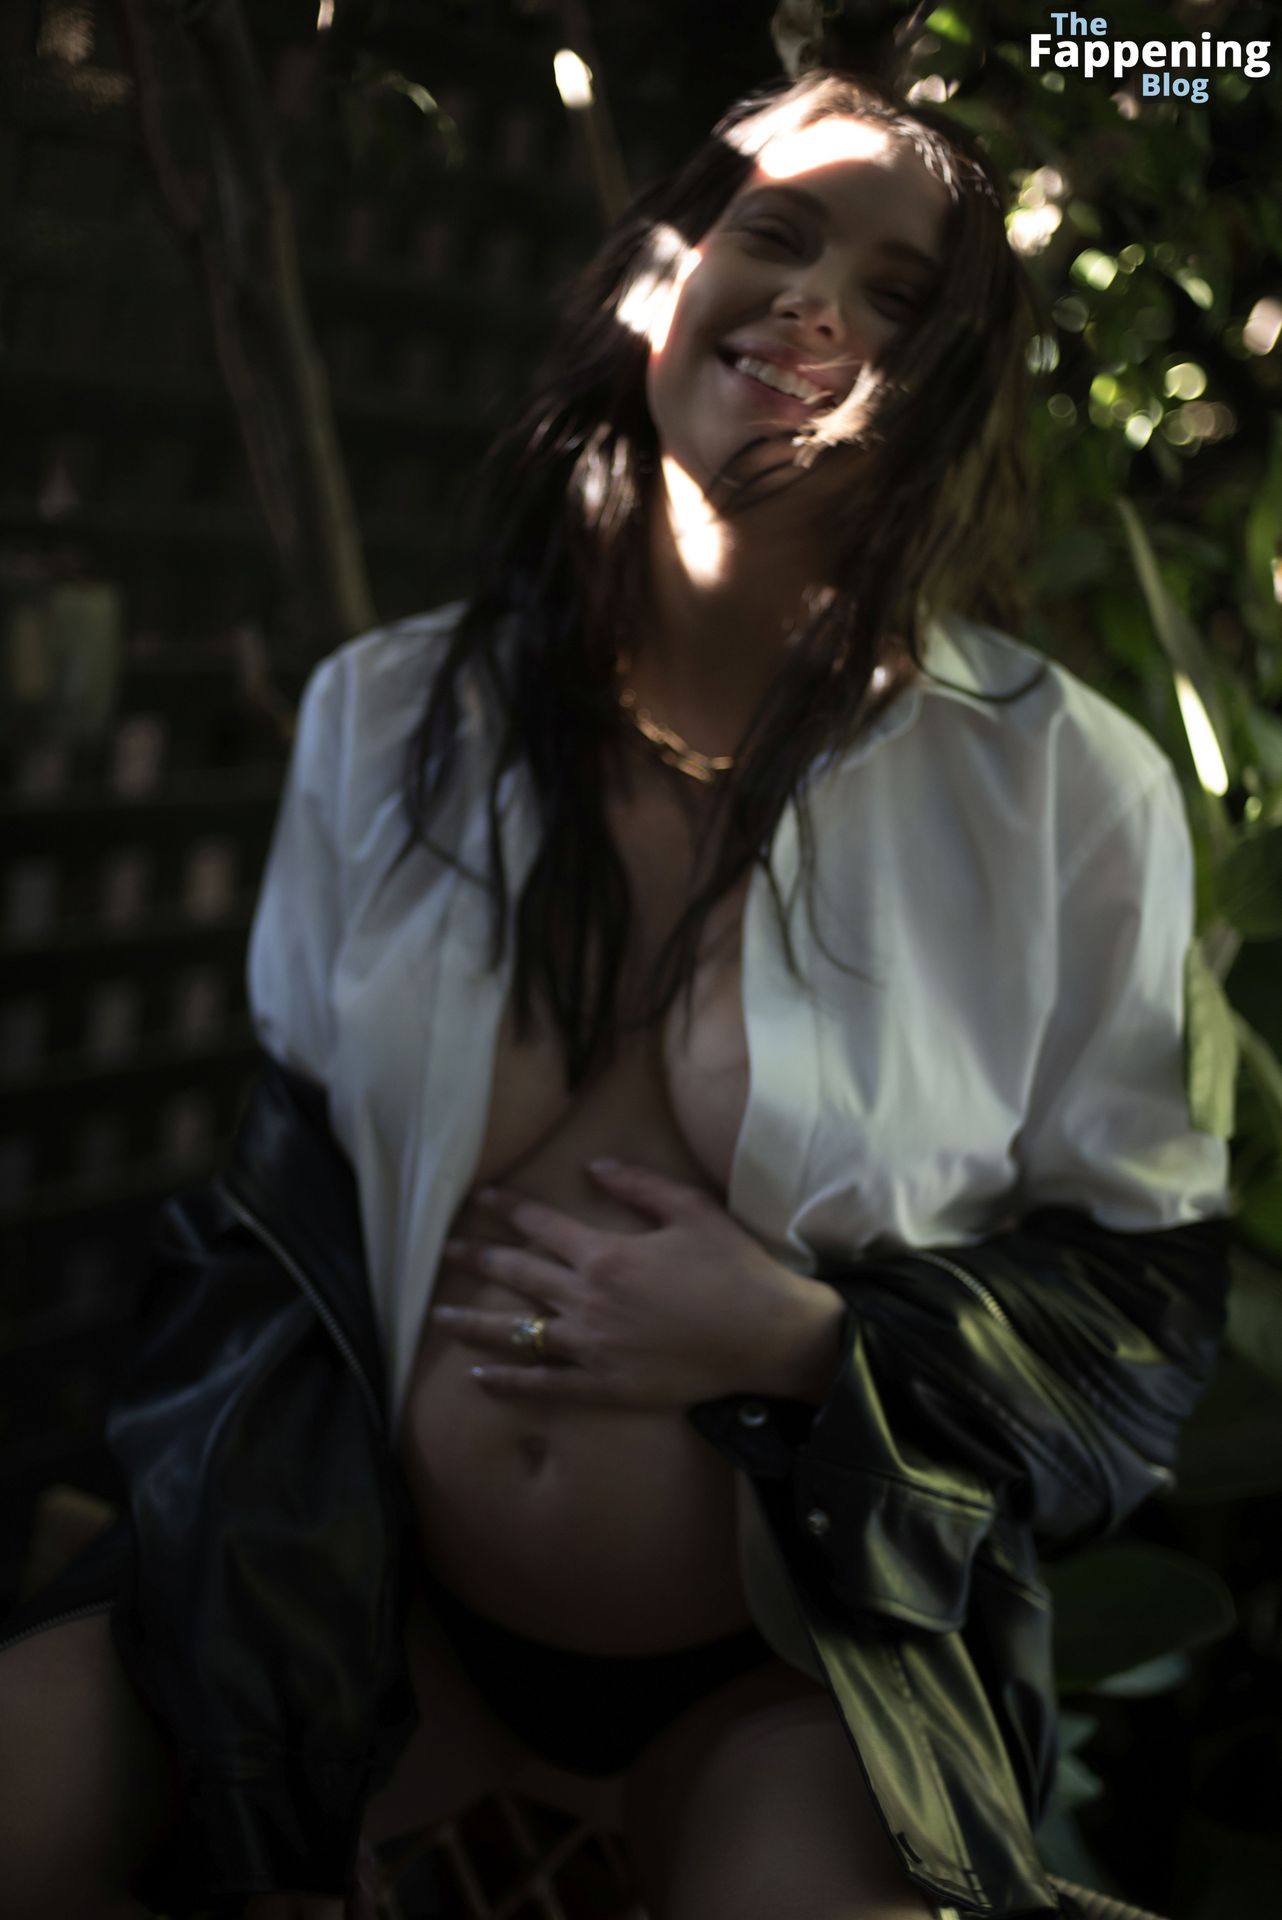 Ashley-Benson-Nude-Sexy-4-The-Fappening-Blog.jpg